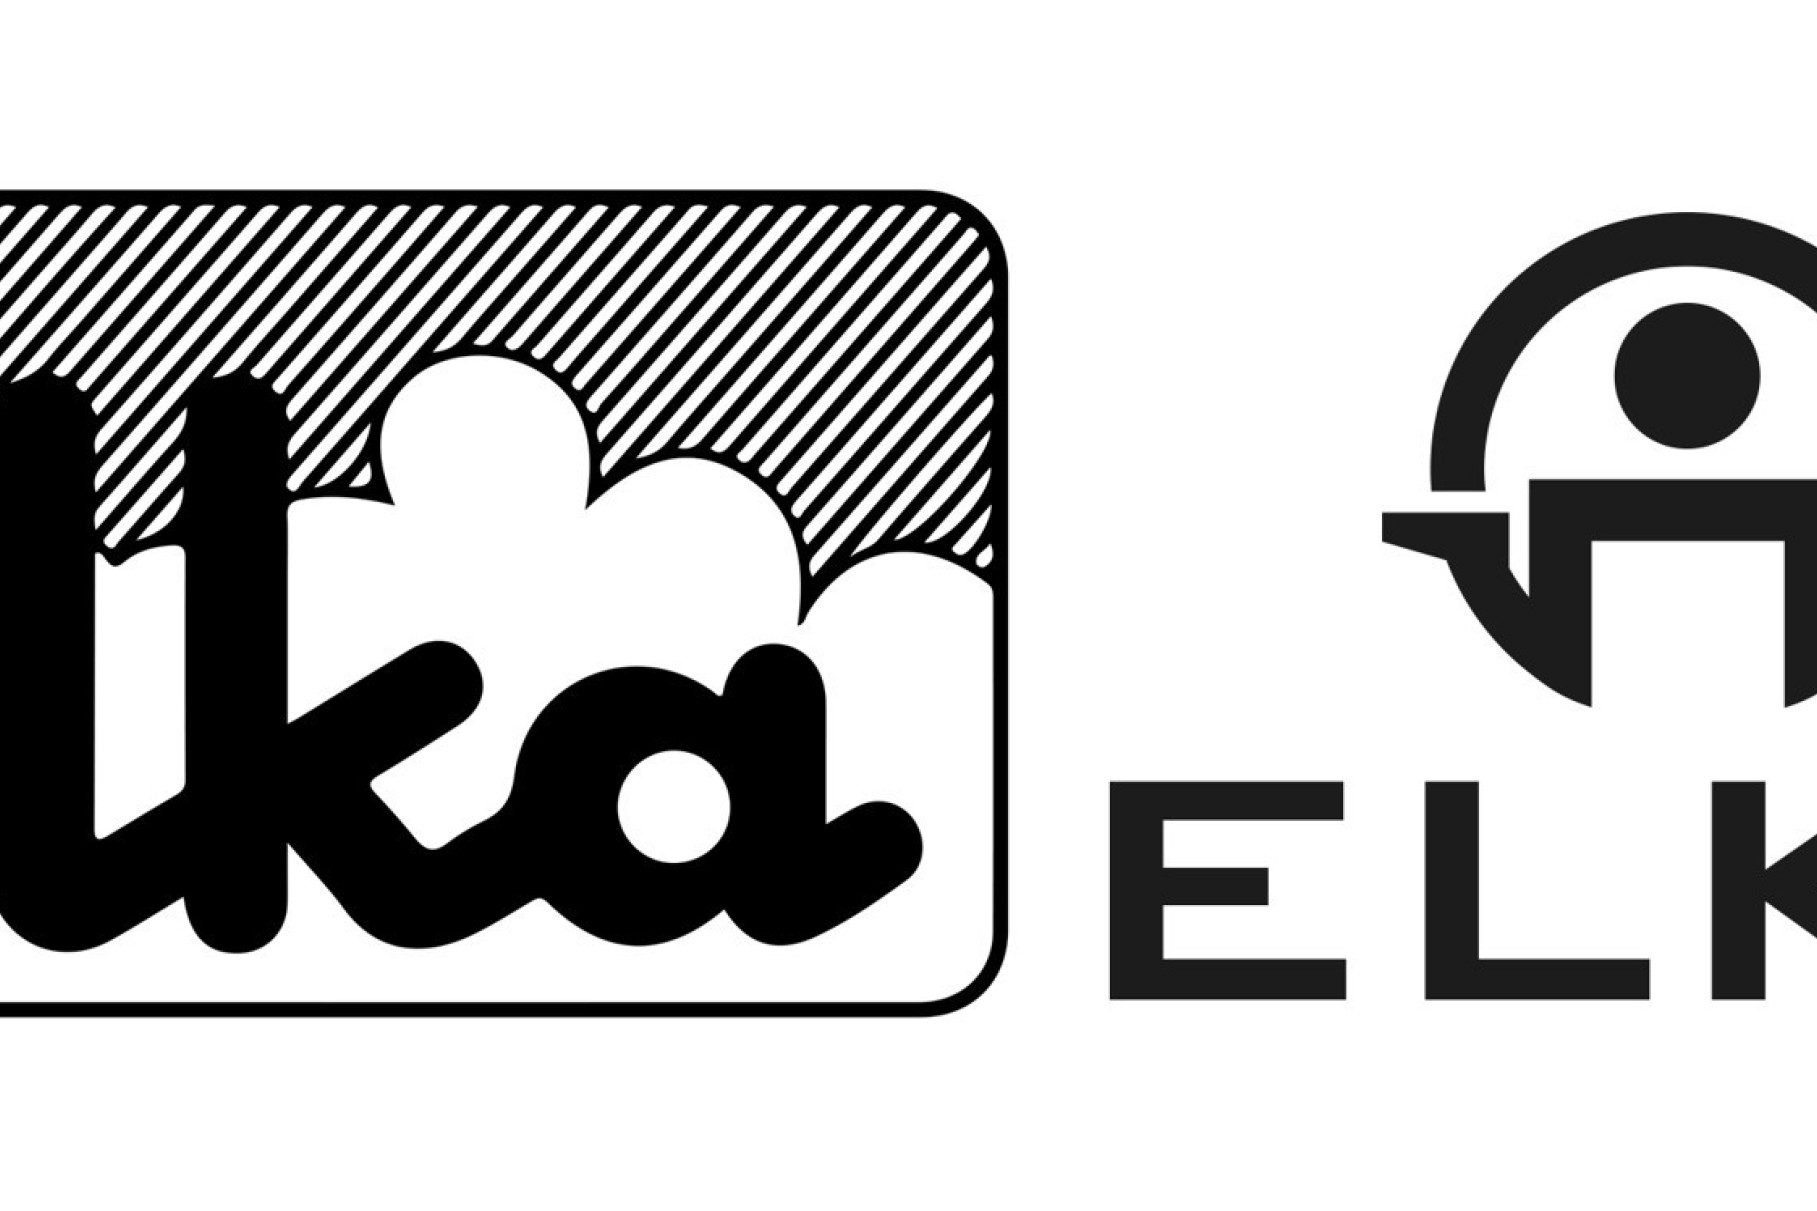 elka rainwear logo